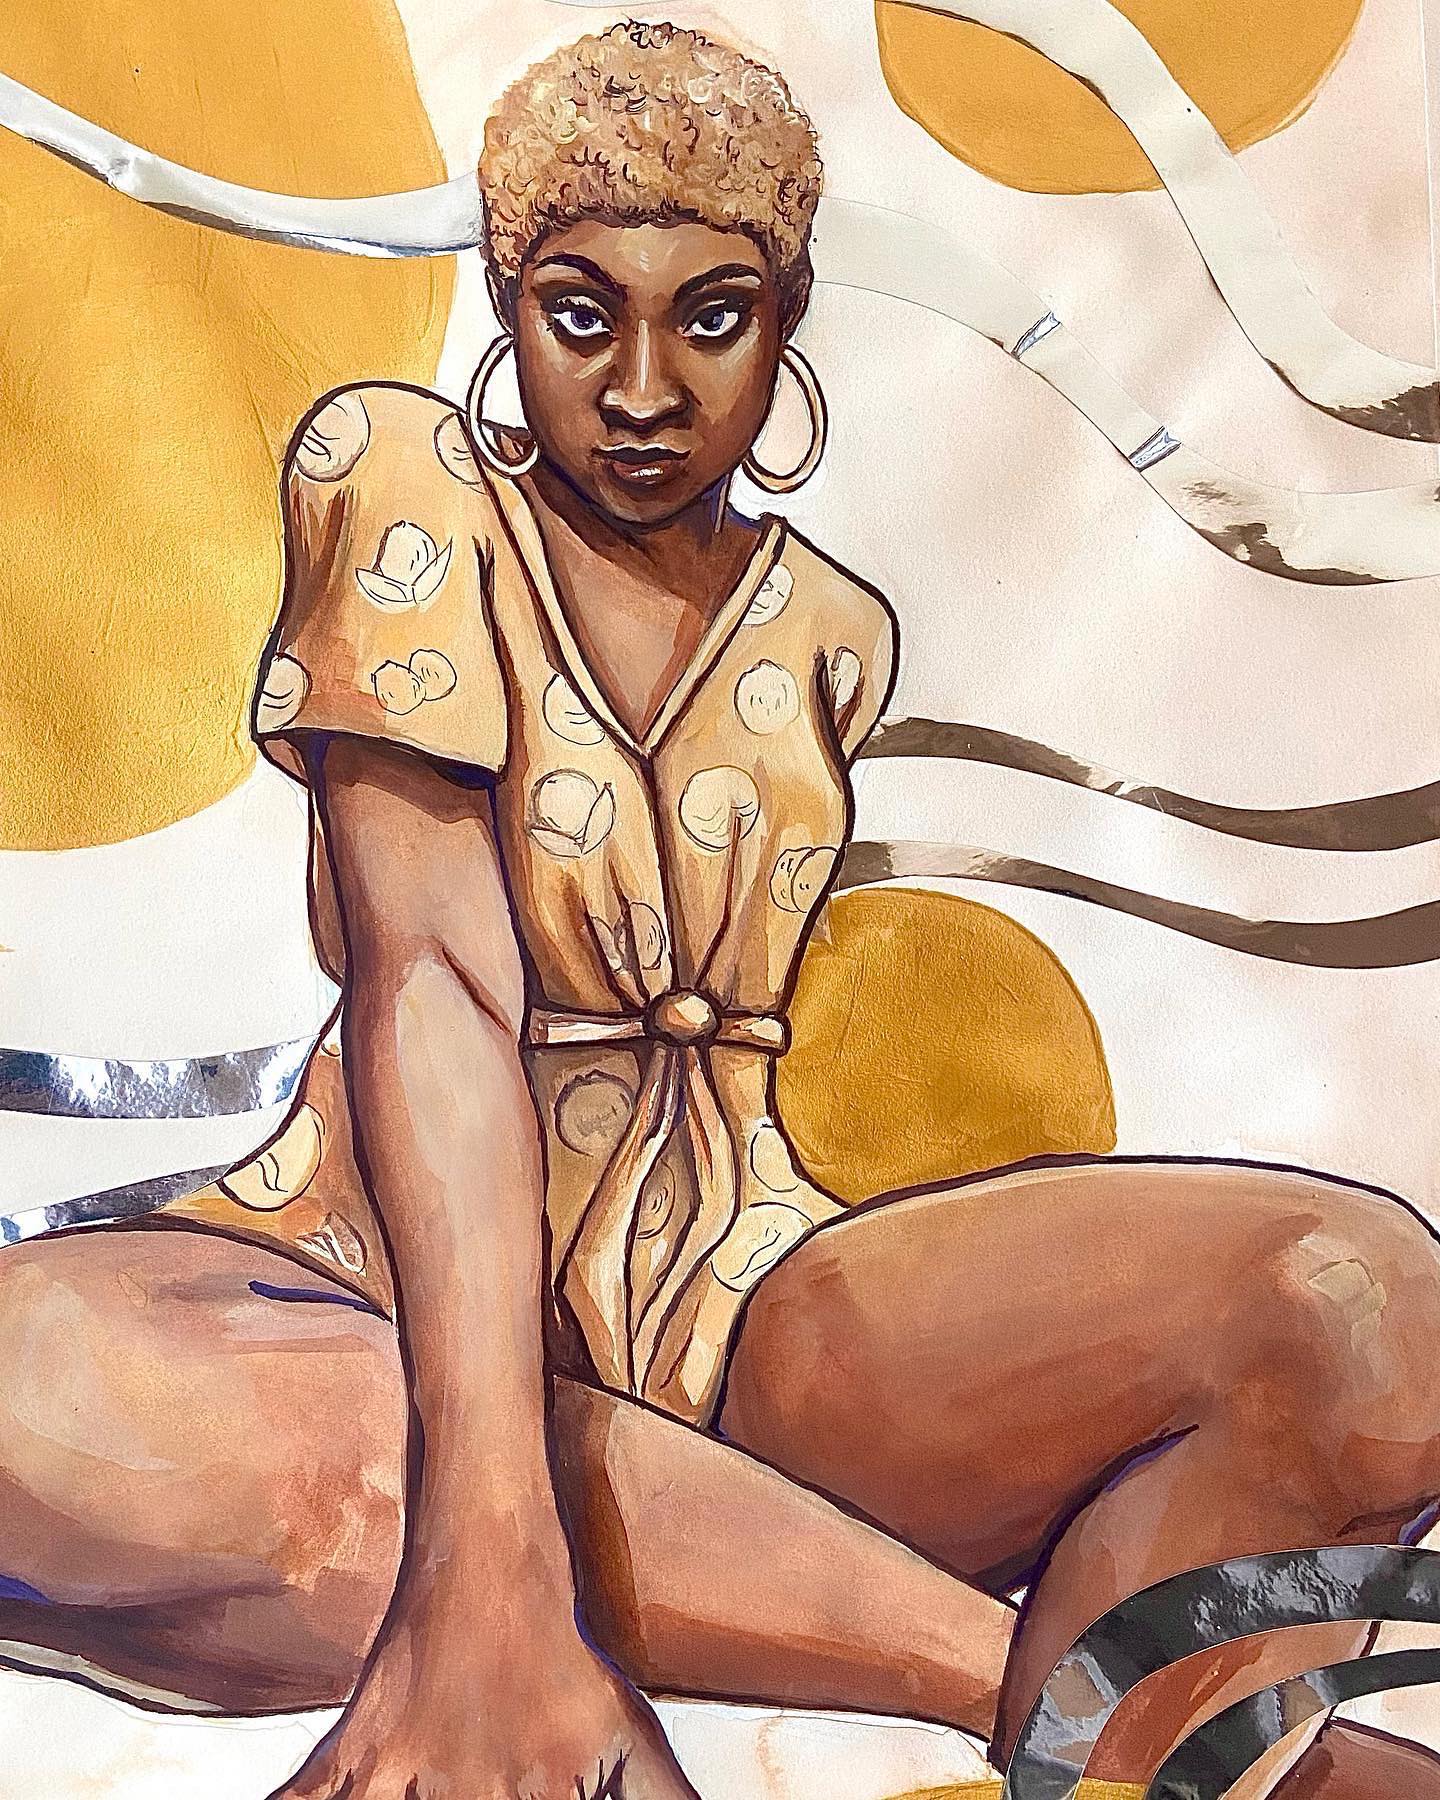 Animation design of a black woman squatting